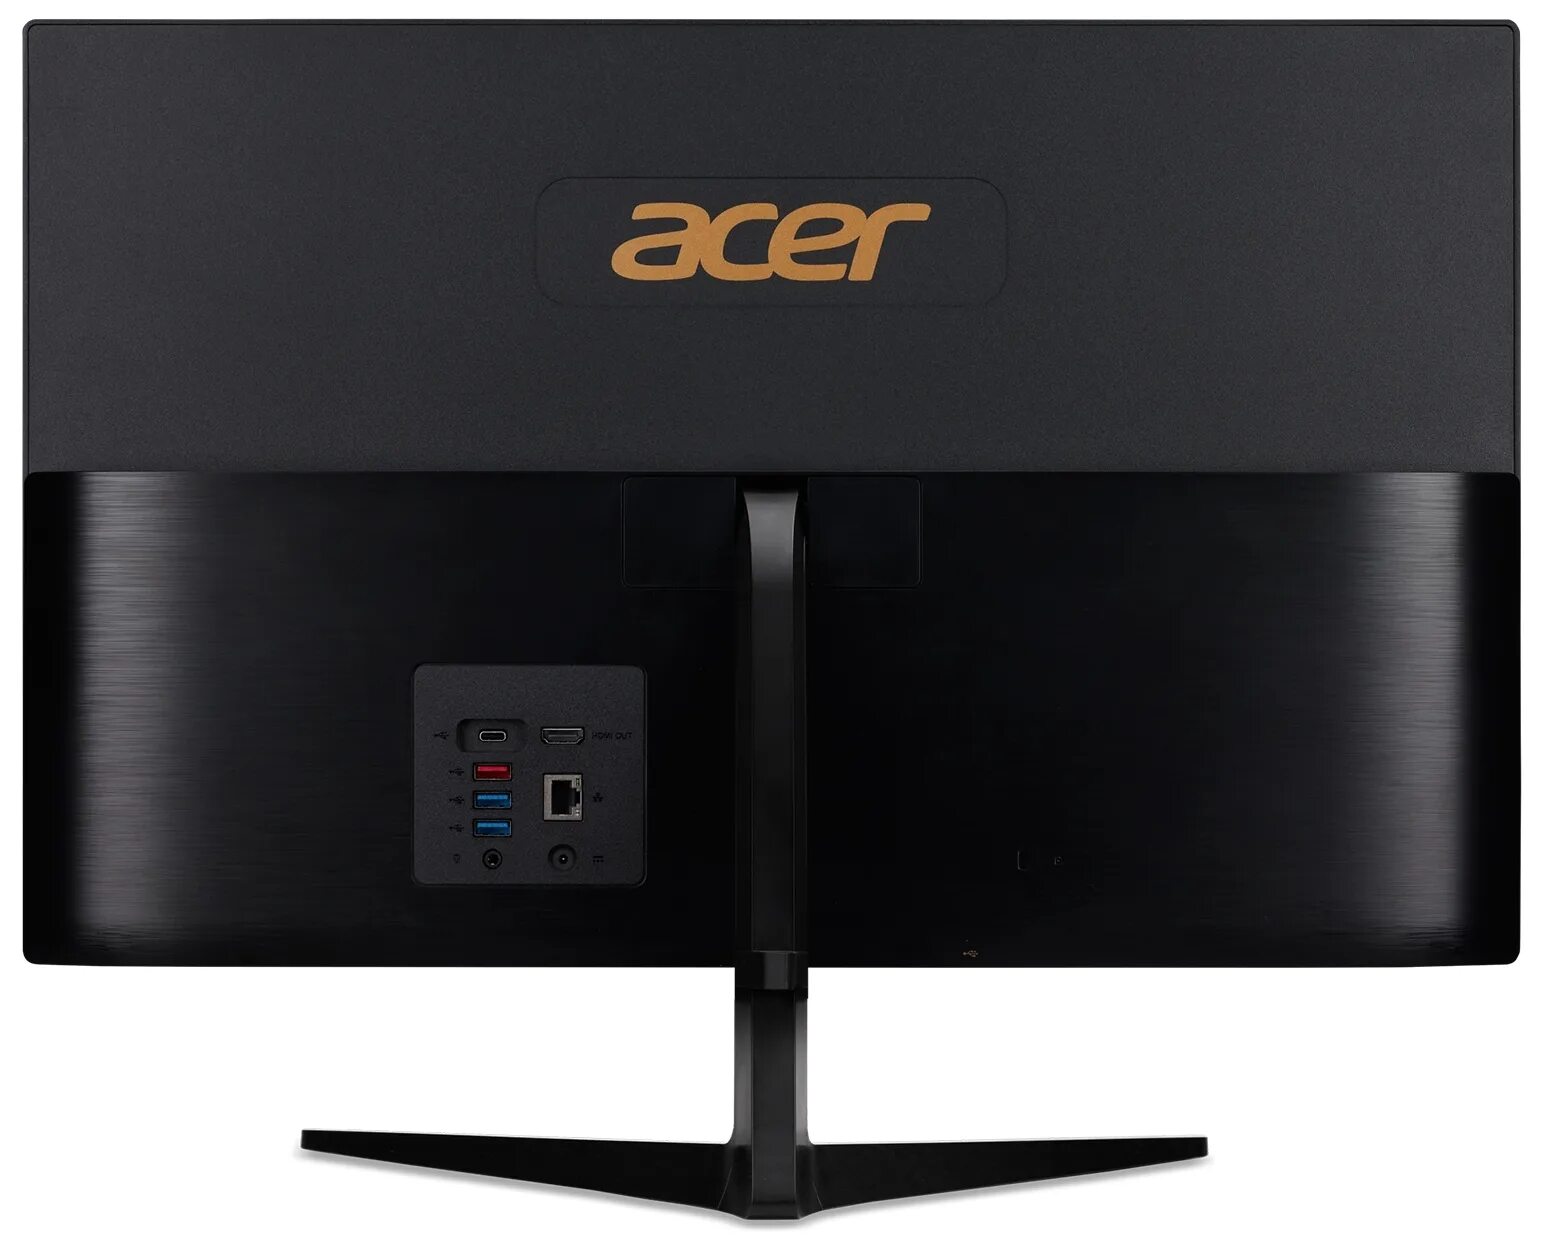 Acer Aspire c24-1700. Aspire c24-1700 DQ.bjwmc.003. Моноблок Acer Aspire c24-1800. Aspire c24-1700 DQ.bjwmc.002.